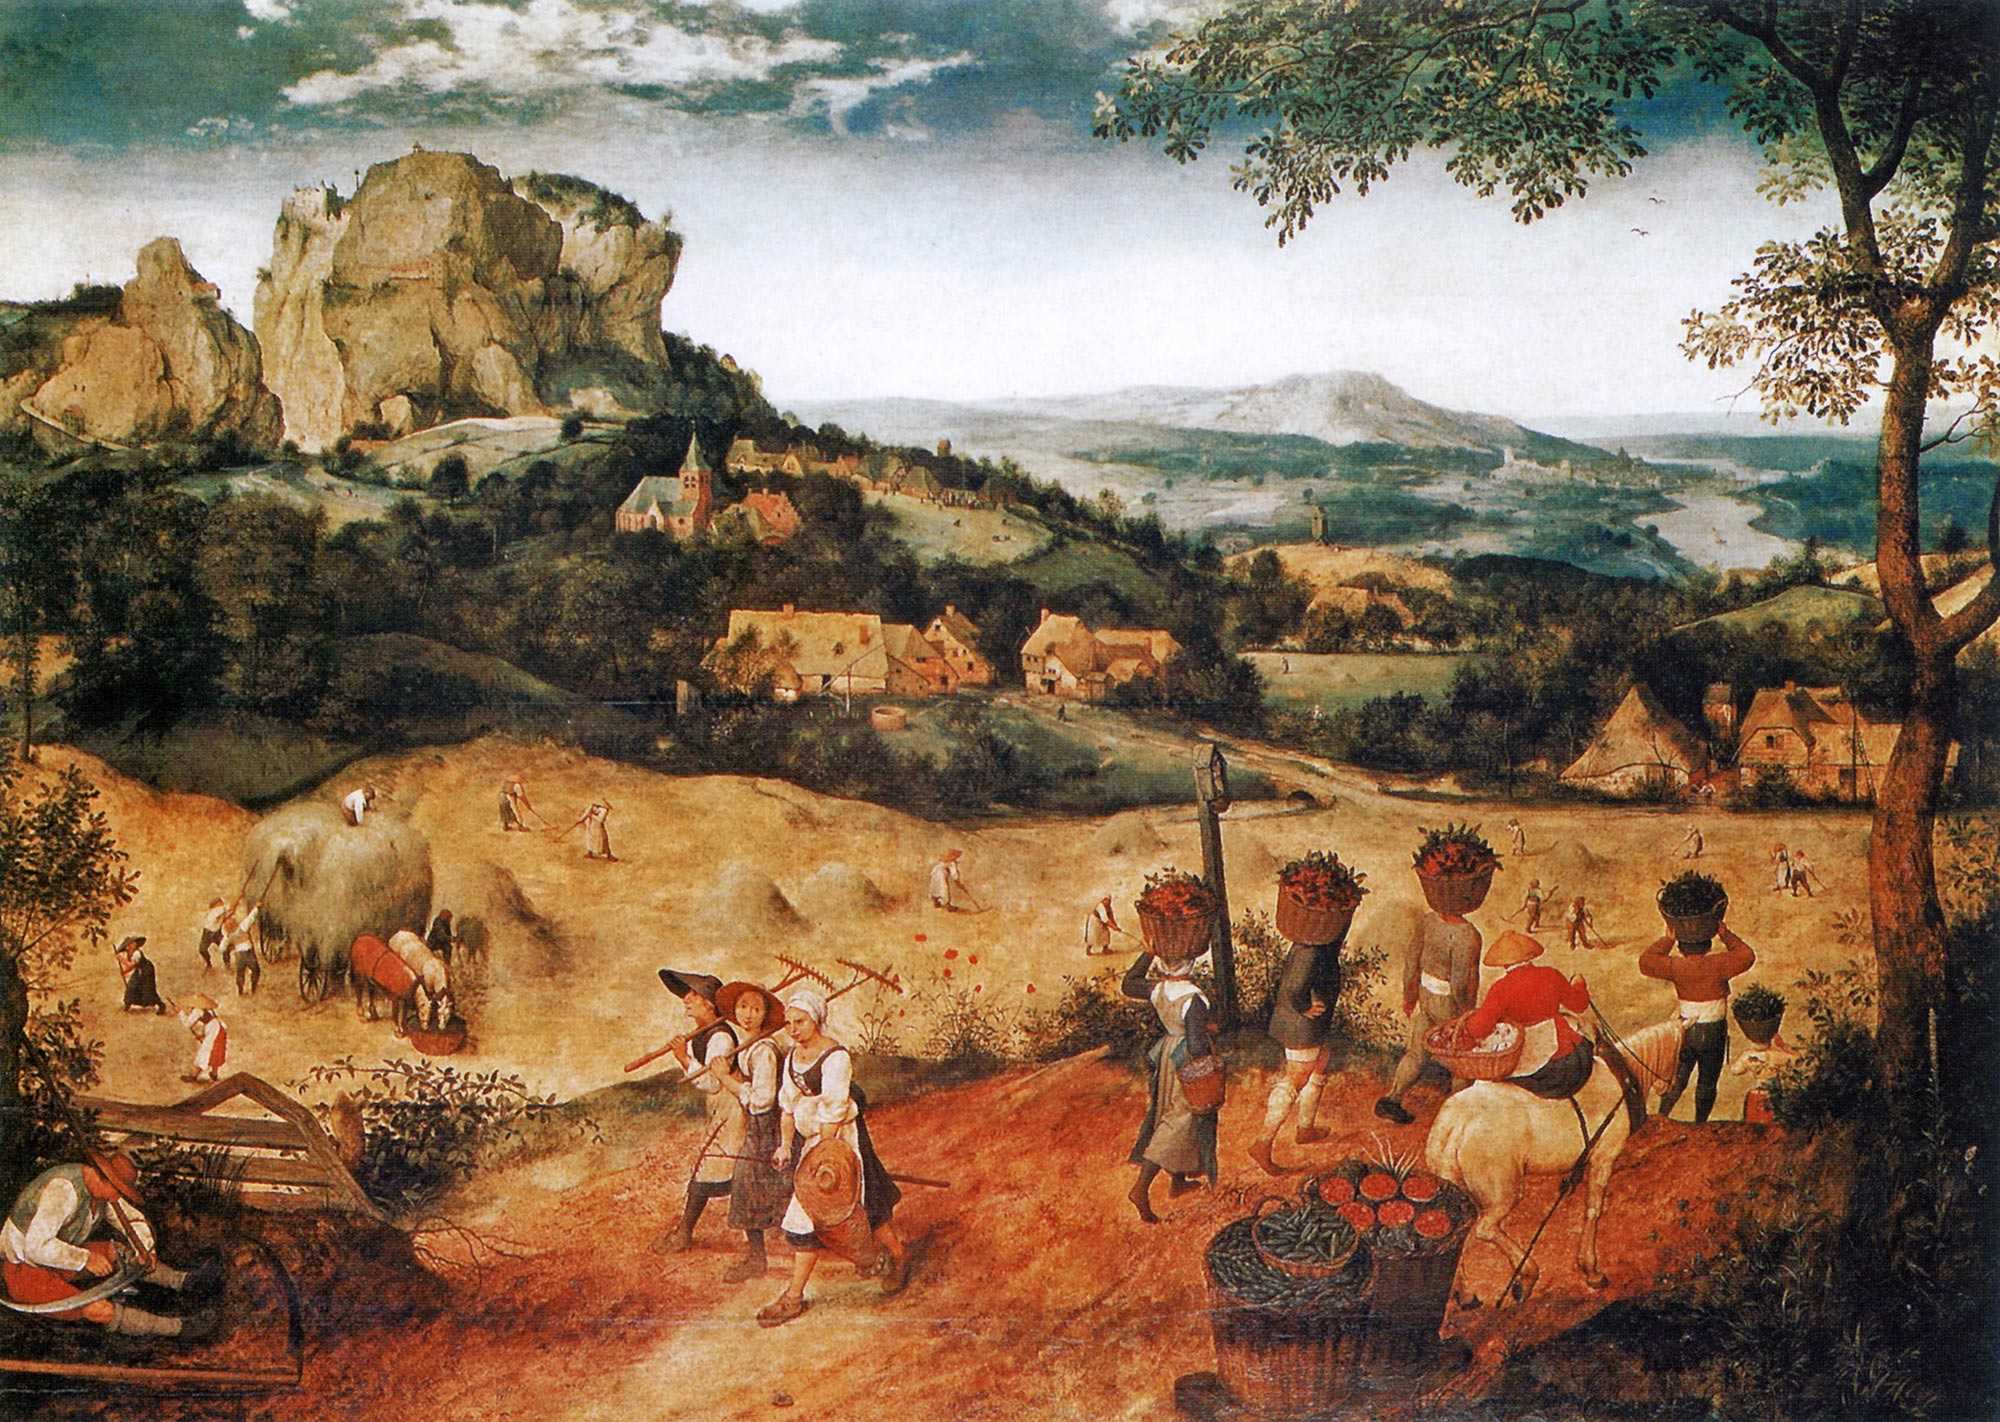 Pieter Bruegel, La fienagione (1565; olio su tavola, 117 x 161 cm; Praga, NÃ¡rodnÃ­ Galerie)
